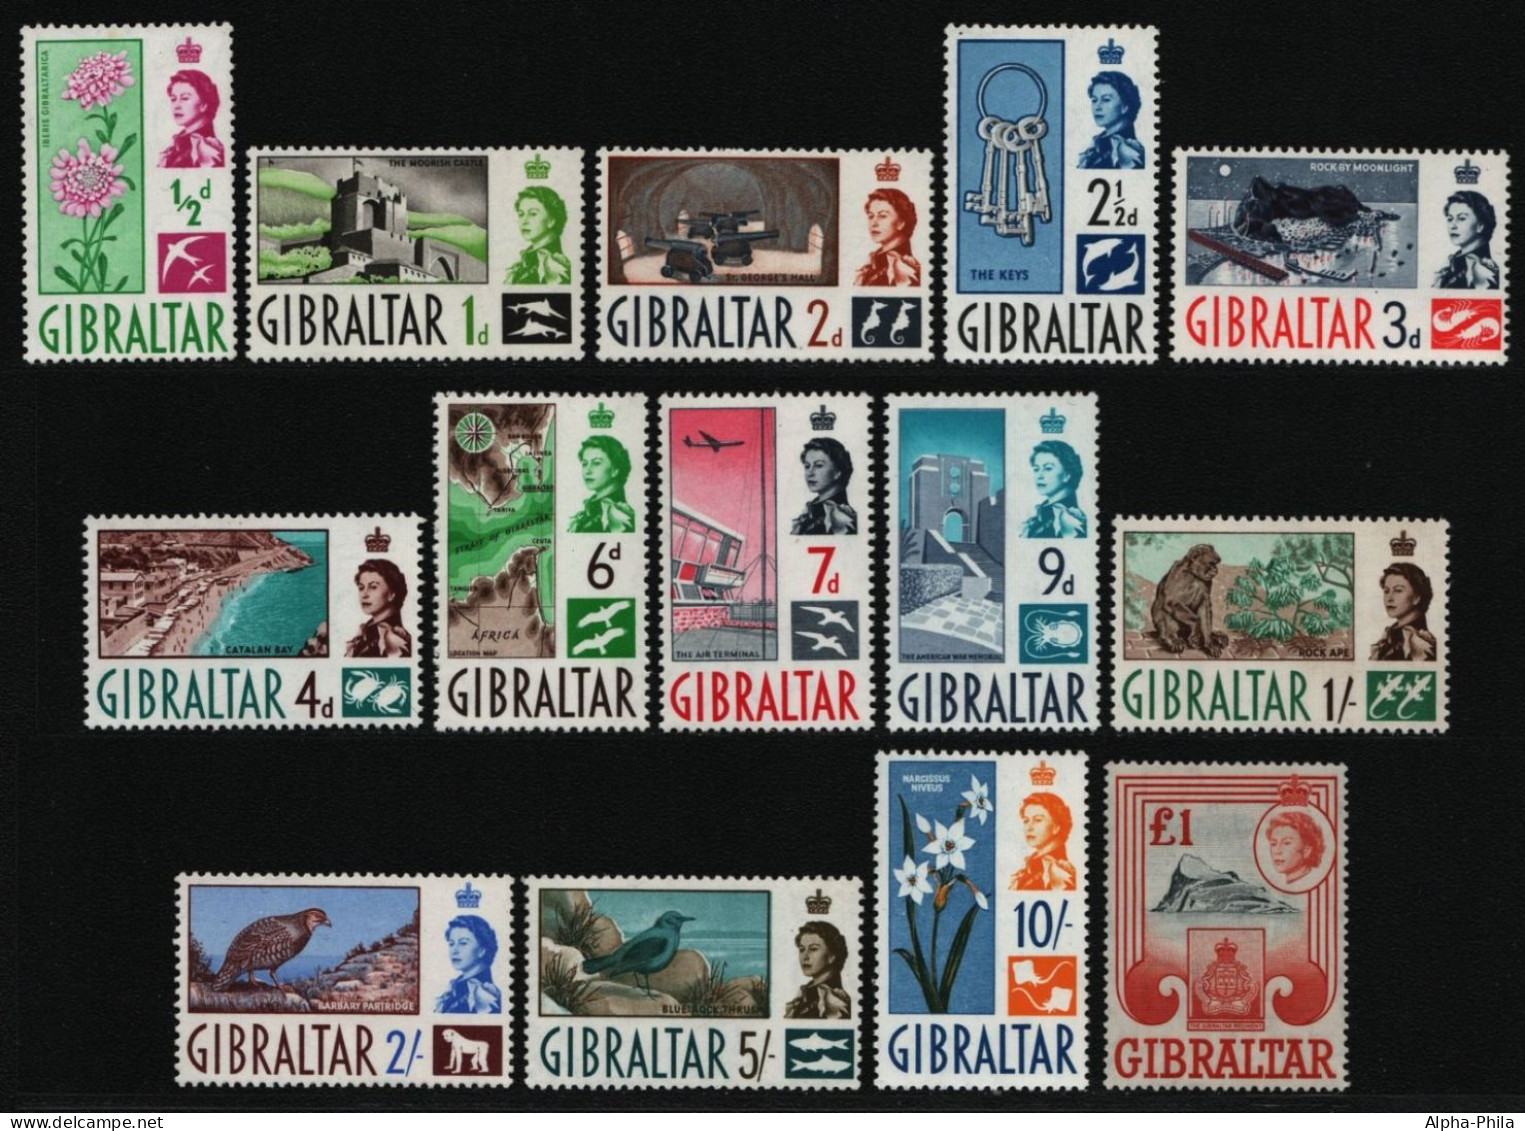 Gibraltar 1963 - Mi-Nr. 149-162 ** - MNH - Queen Elizabeth II - Gibraltar